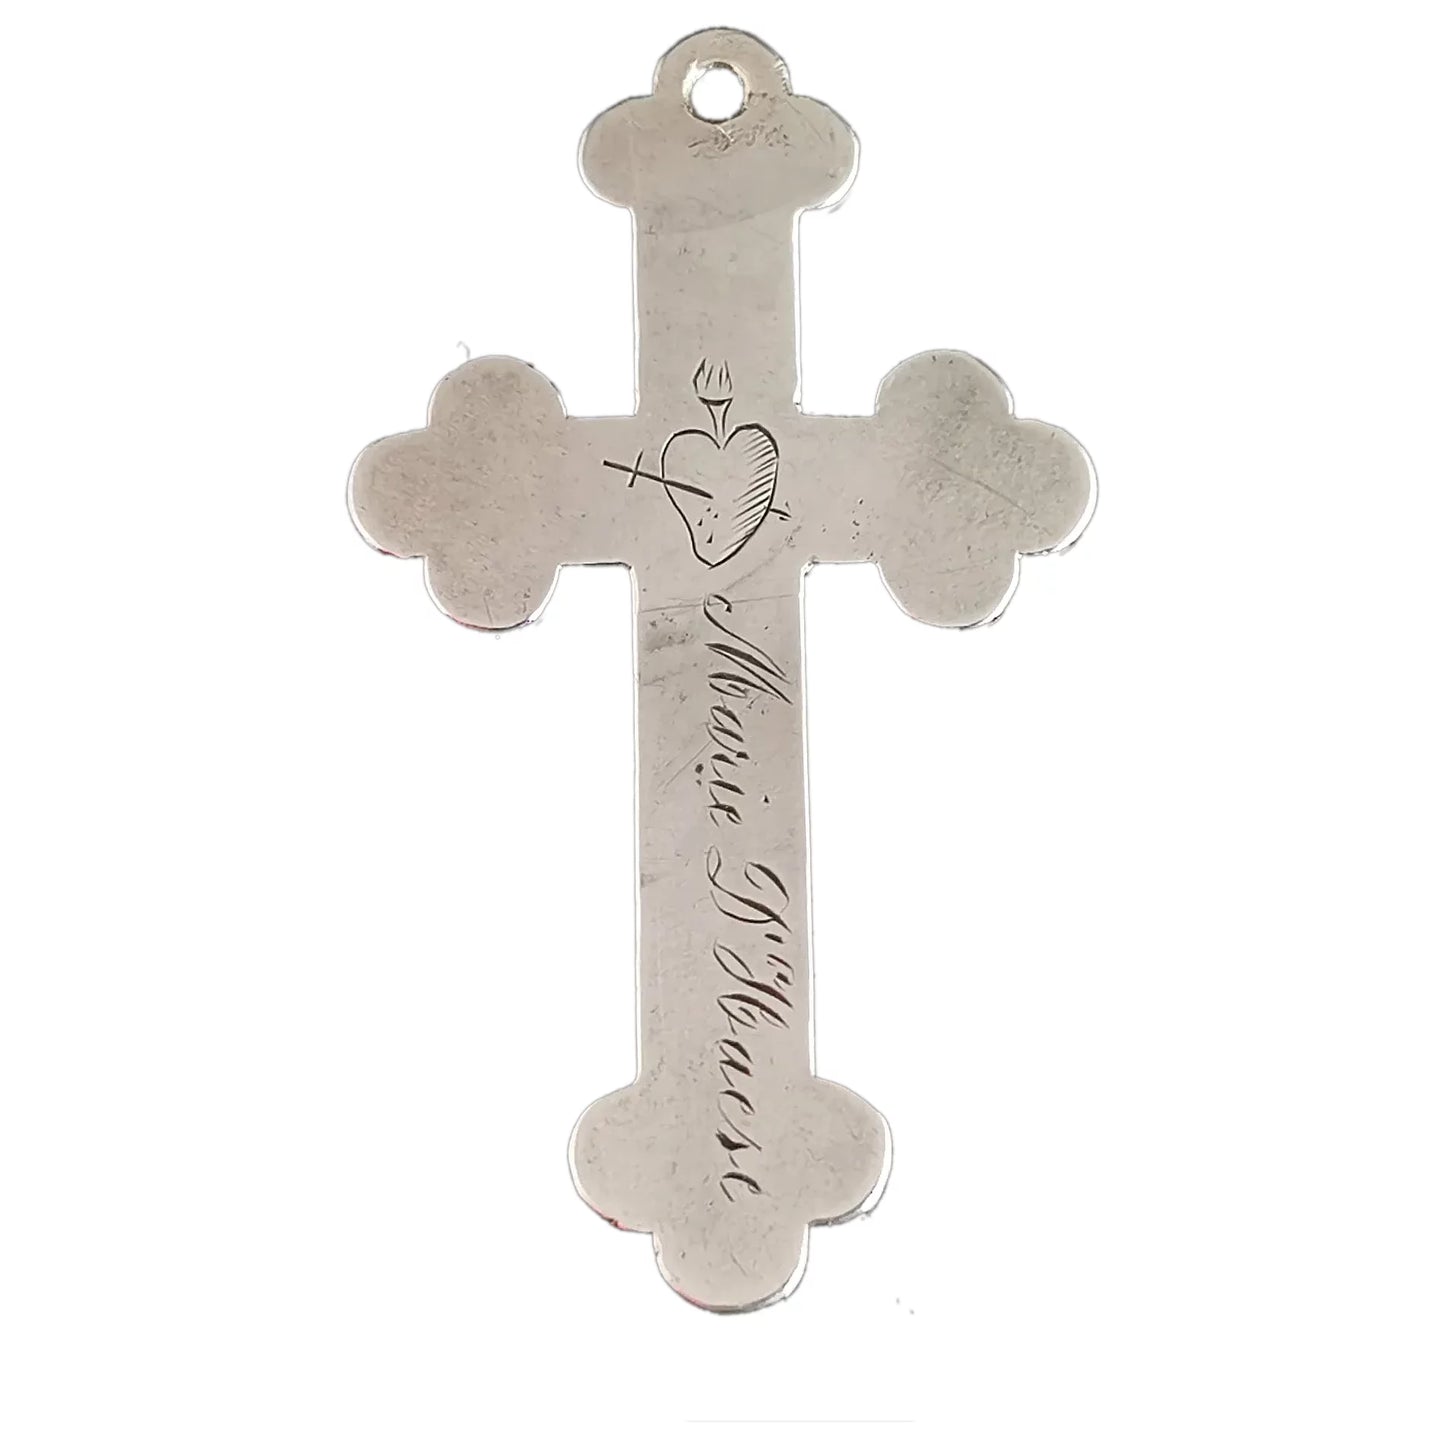 Antique silver cross pendant, heart and dagger